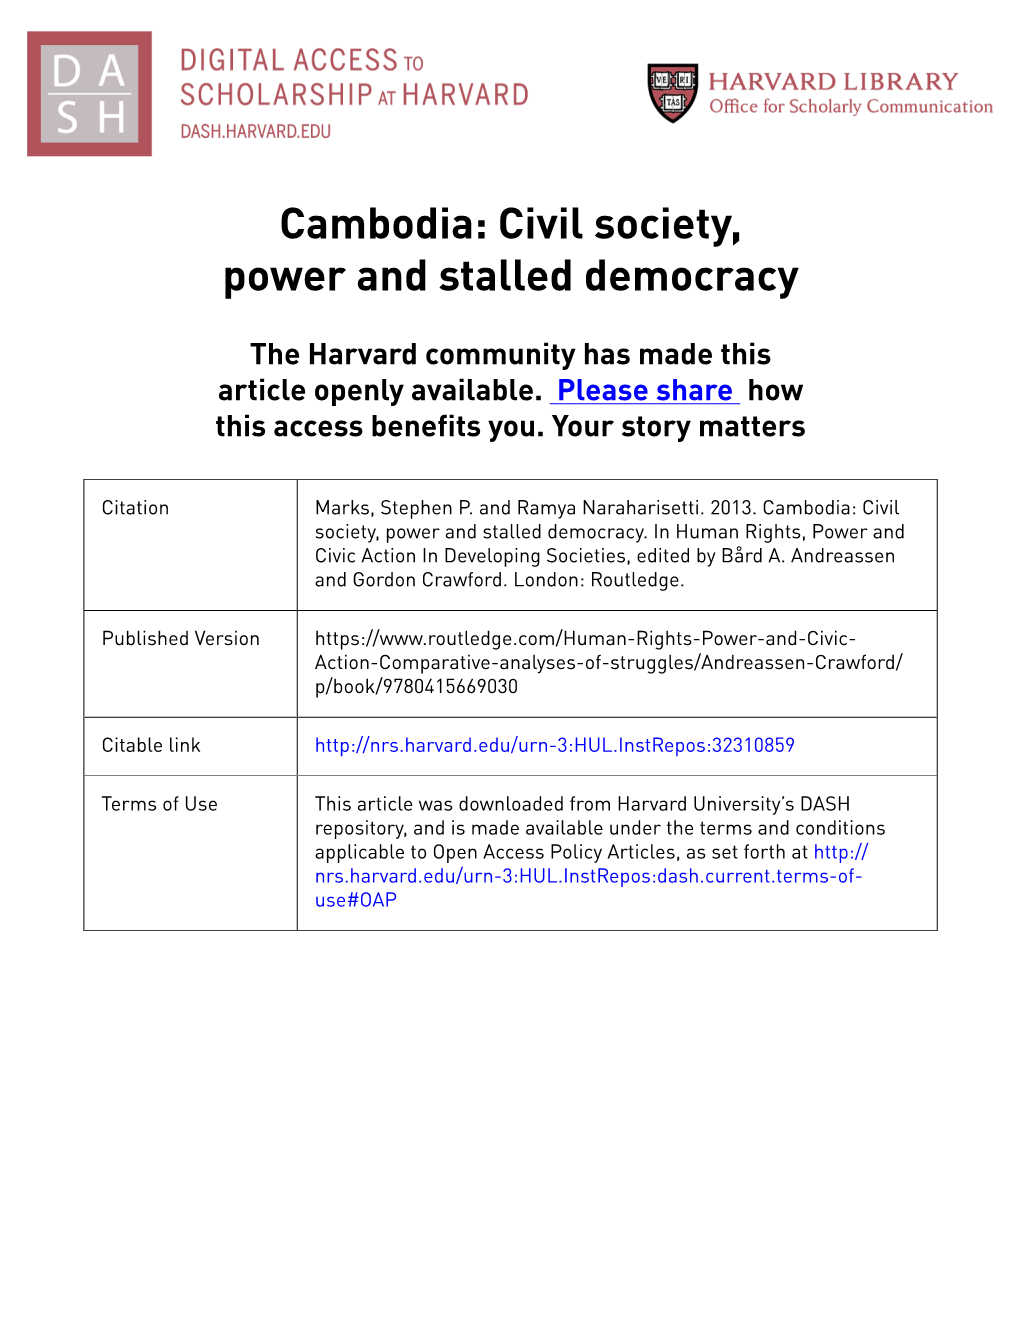 Cambodia: Civil Society, Power and Stalled Democracy